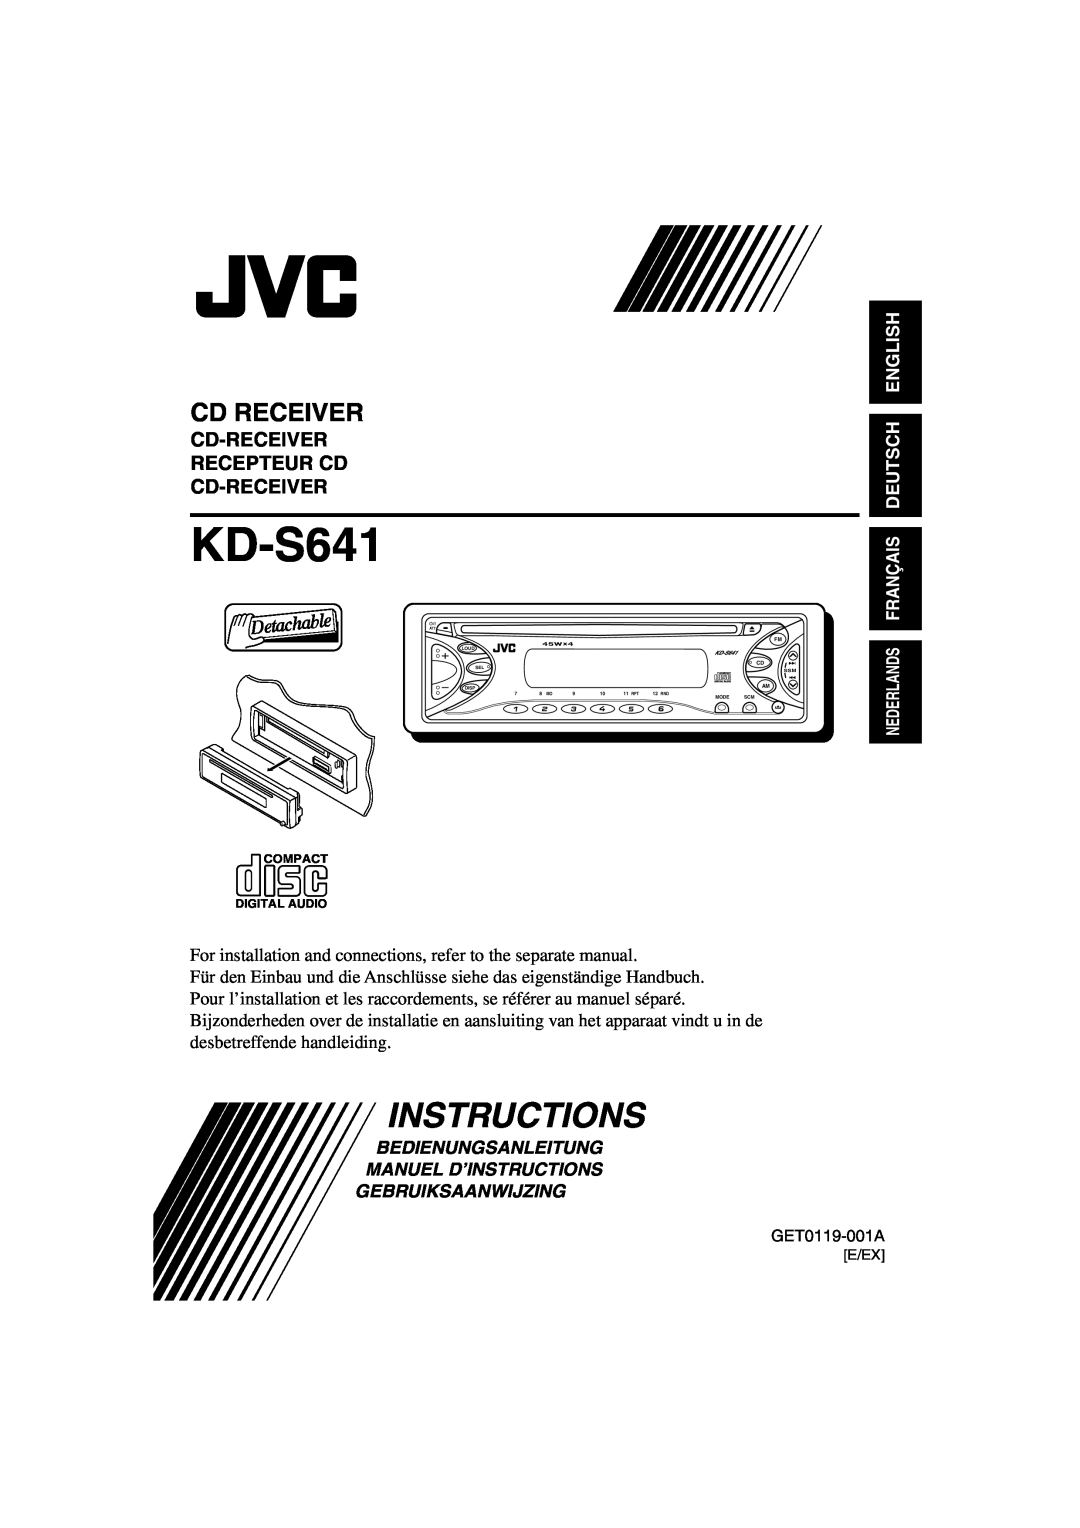 JVC KD-S641 manual Cd Receiver, Cd-Receiver Recepteur Cd Cd-Receiver, English Deutsch, Instructions, Gebruiksaanwijzing 